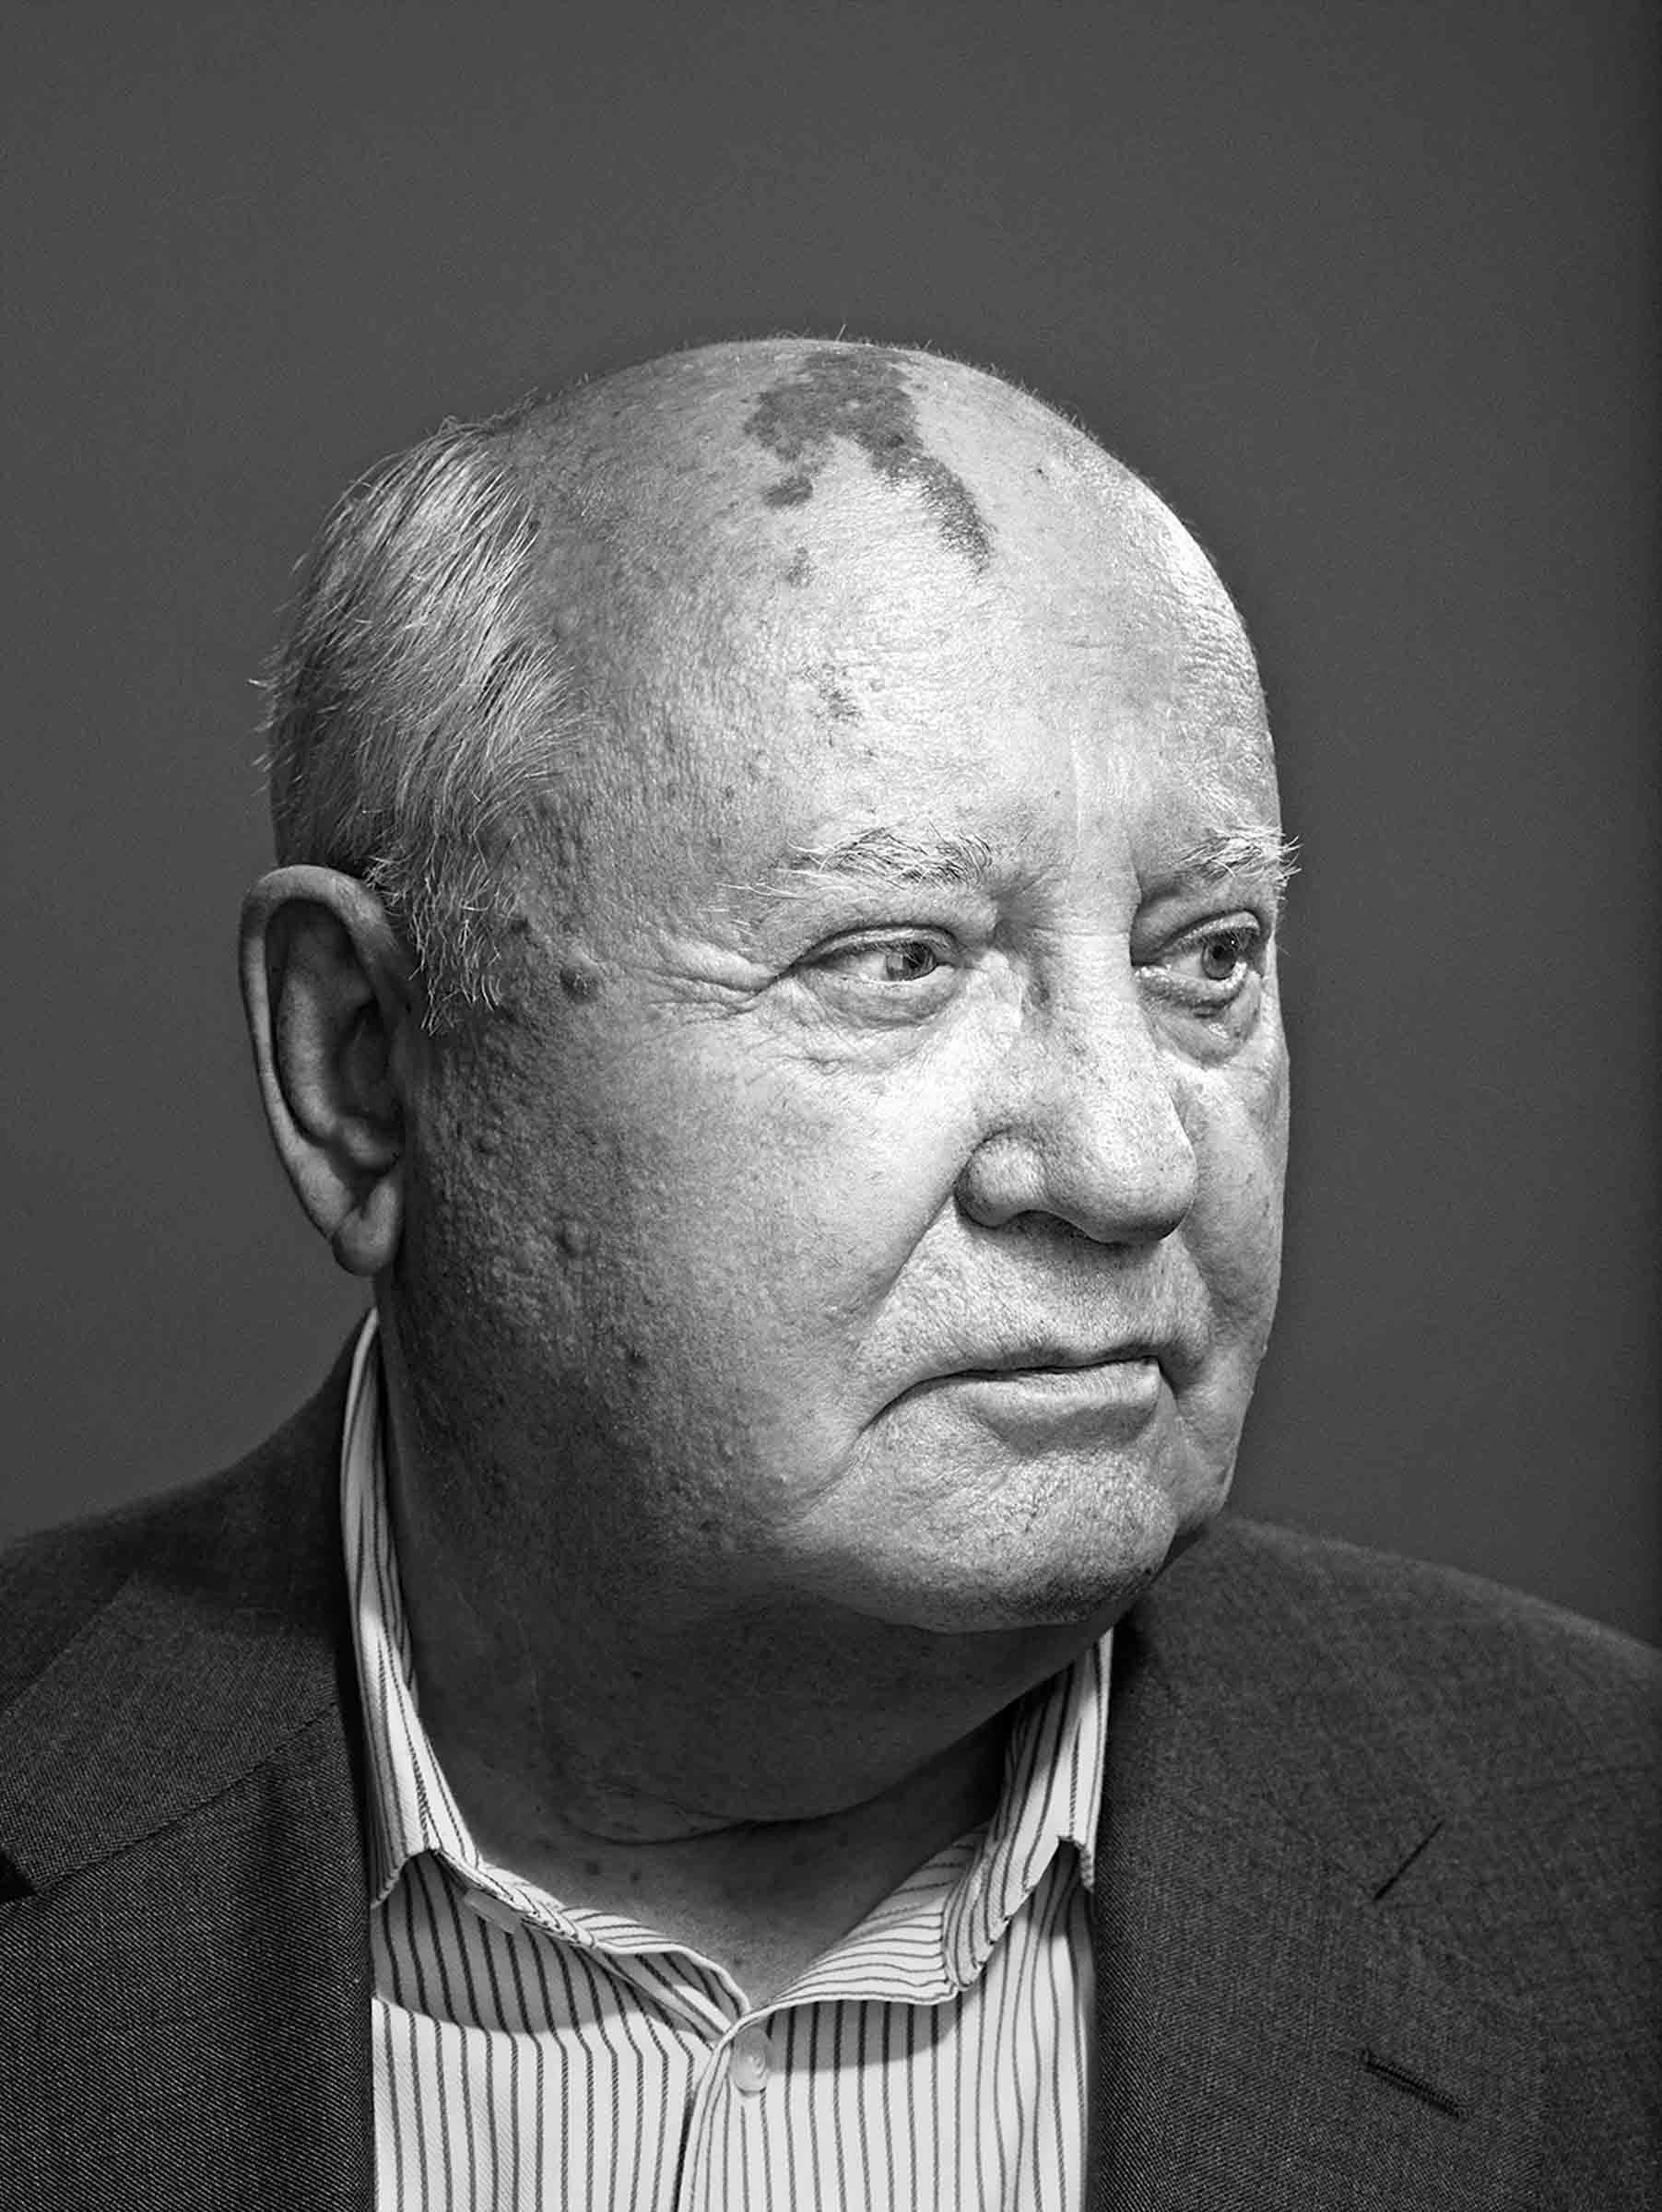 A portrait of Mikhail Gorbachev